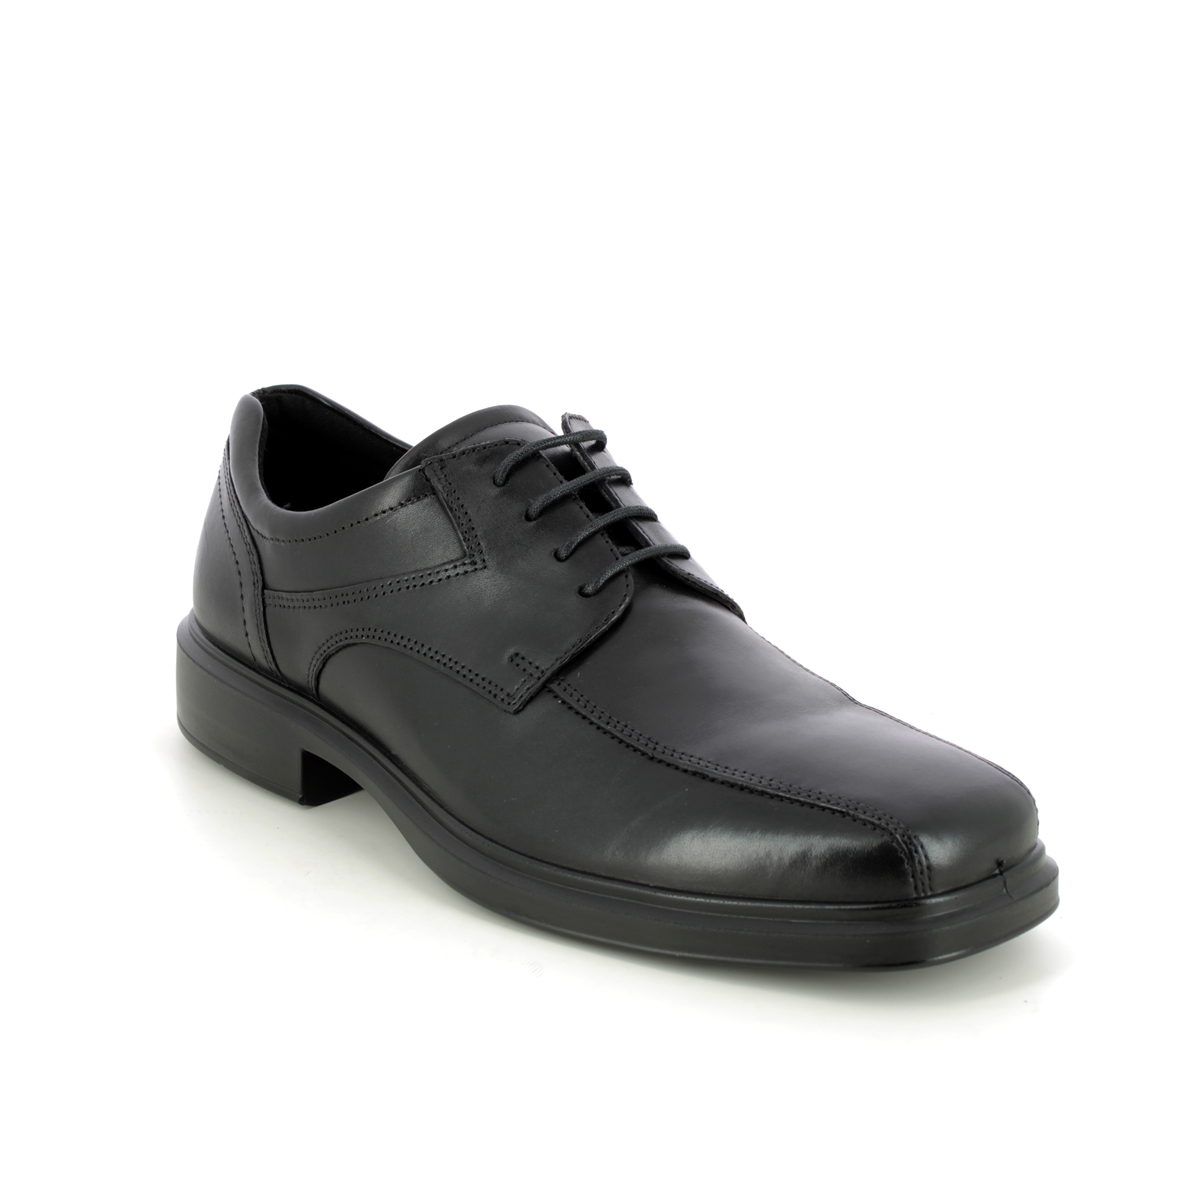 Ecco Helsinki 2 Tram Black Leather Mens Formal Shoes 500174-01001 In Size 44 In Plain Black Leather